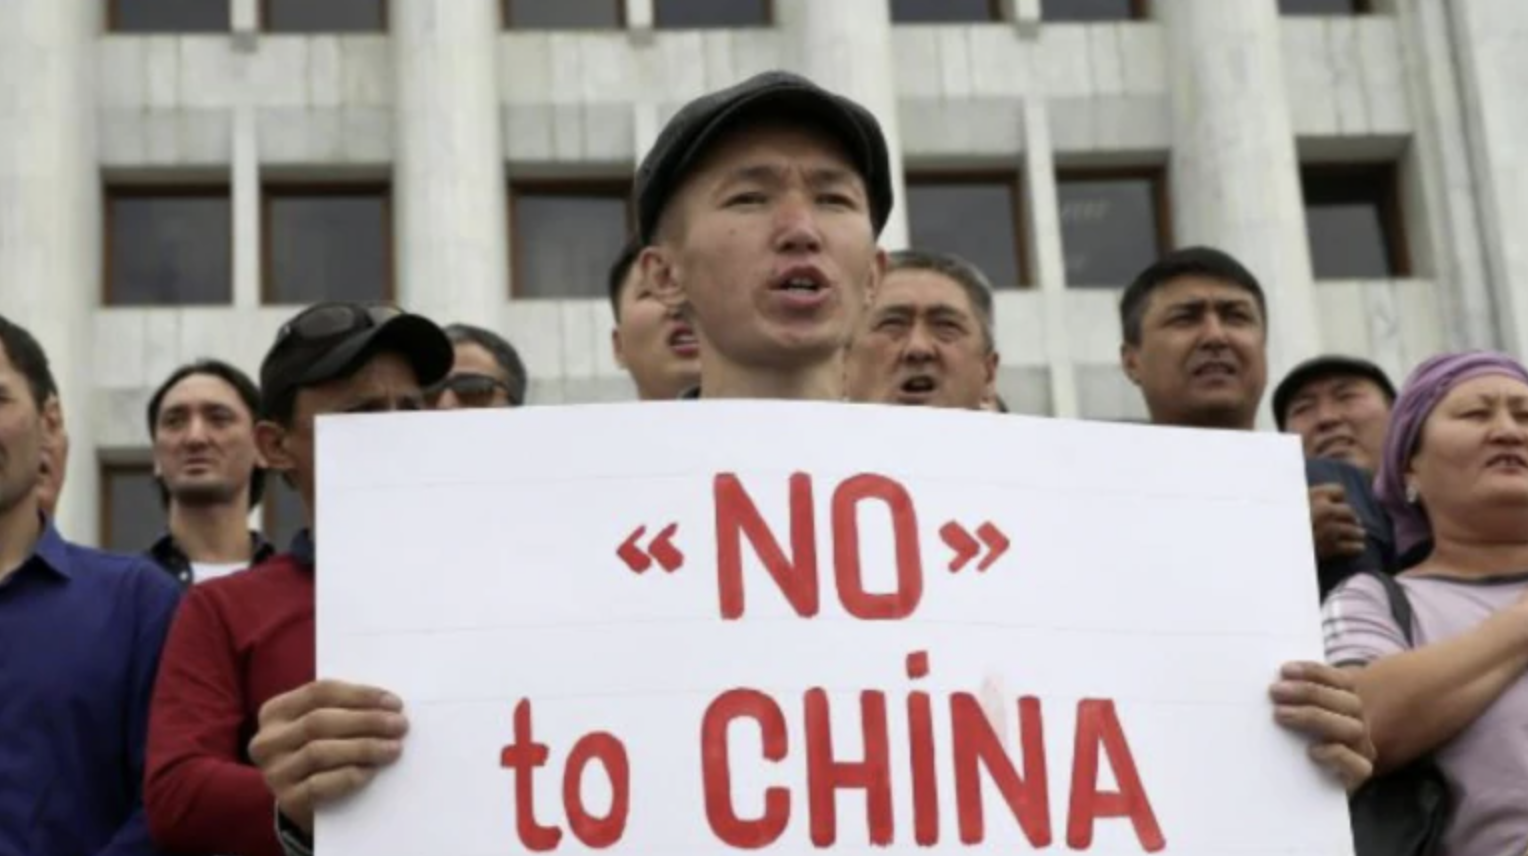 China Now Lays Claim on Bhutan's Territory, Thimphu Counters Beijing's Move